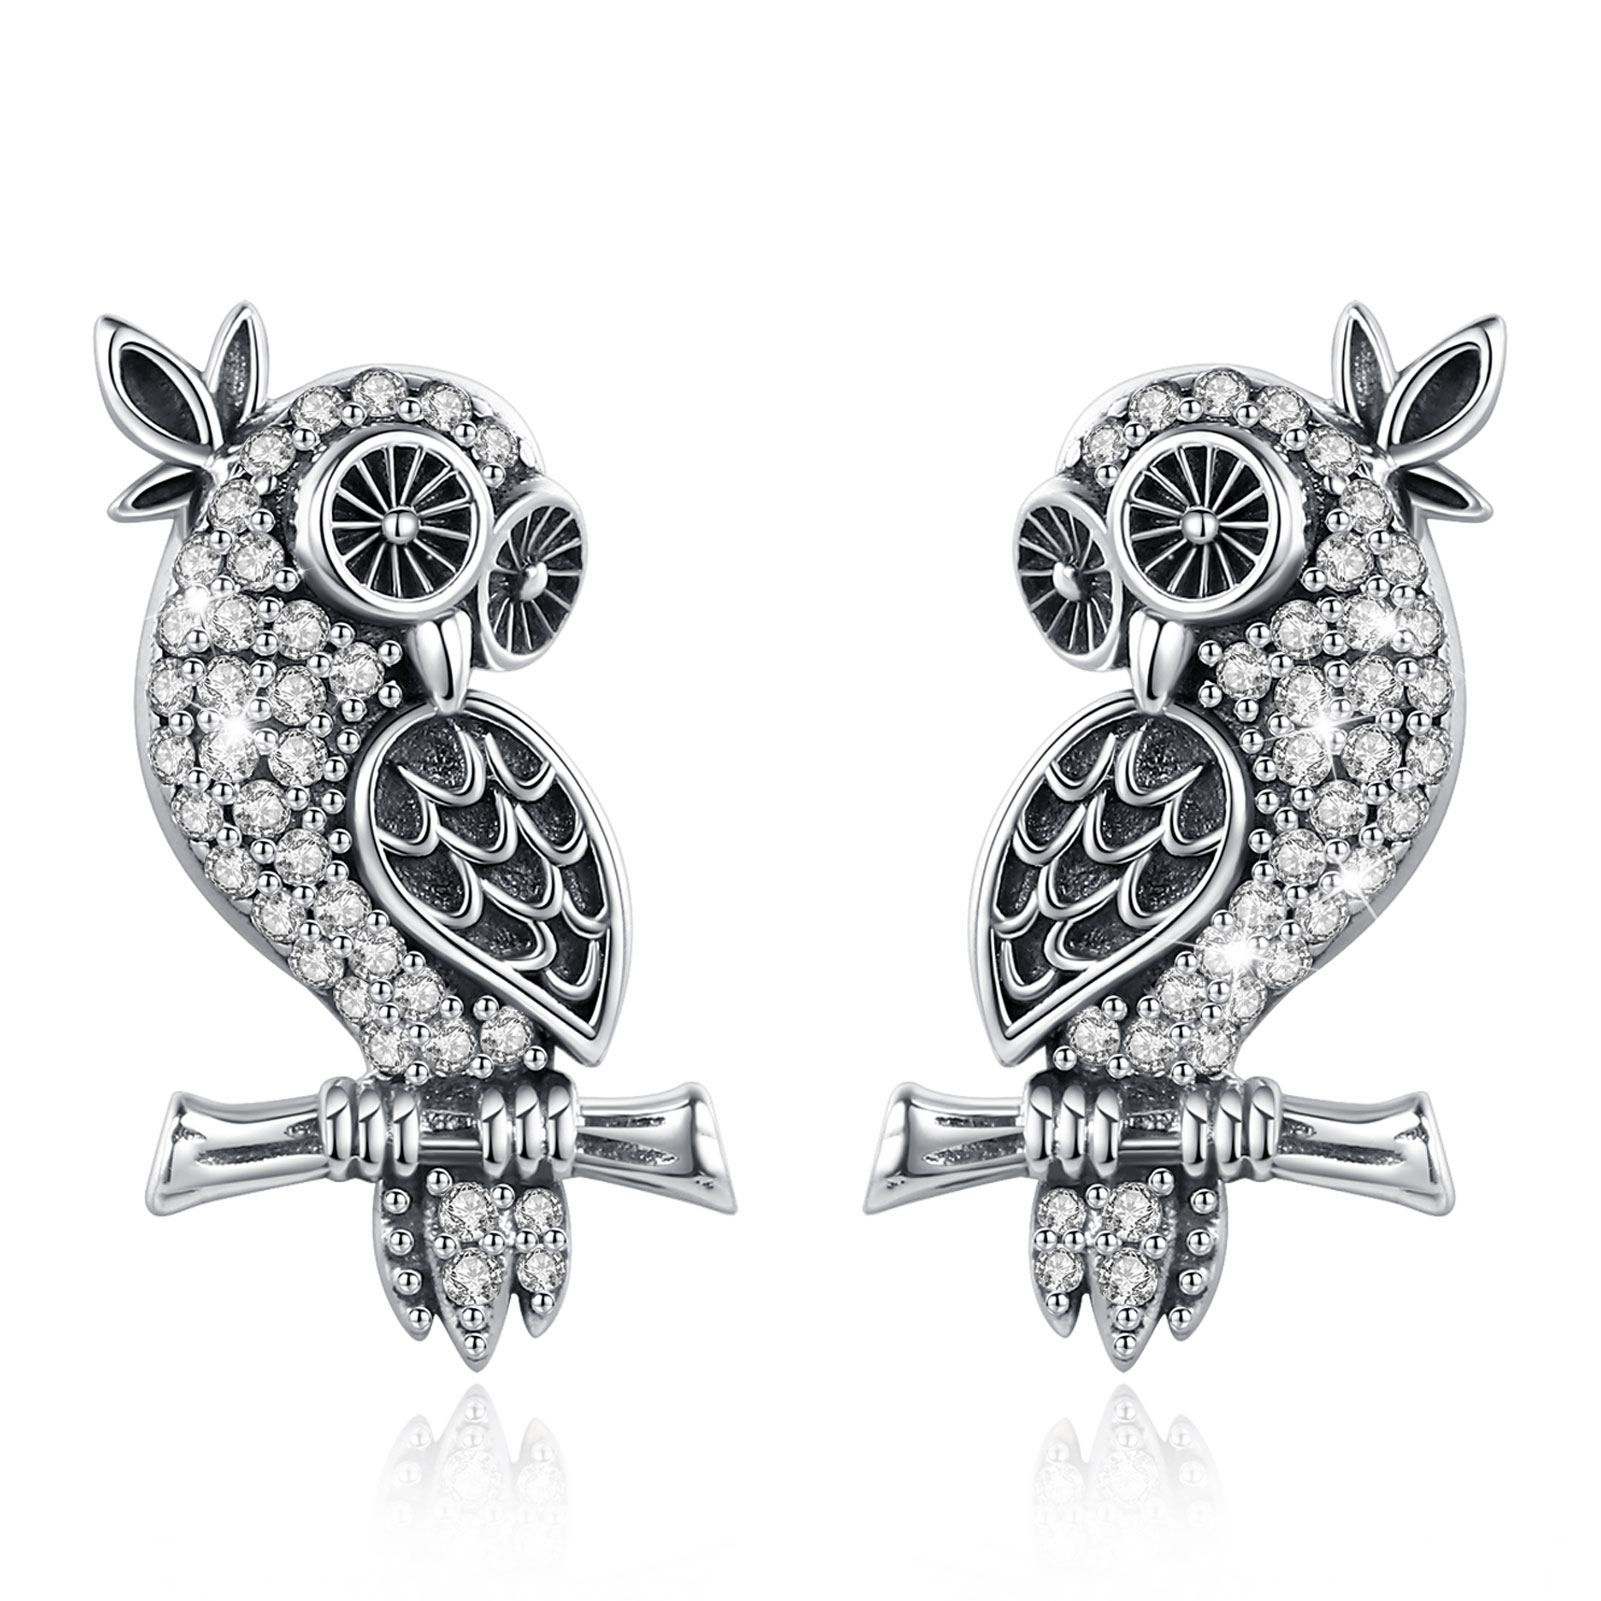 Merryshine Jewelry Fashion S925 Sterling Silver Owl Stud Earrings for Women 2021